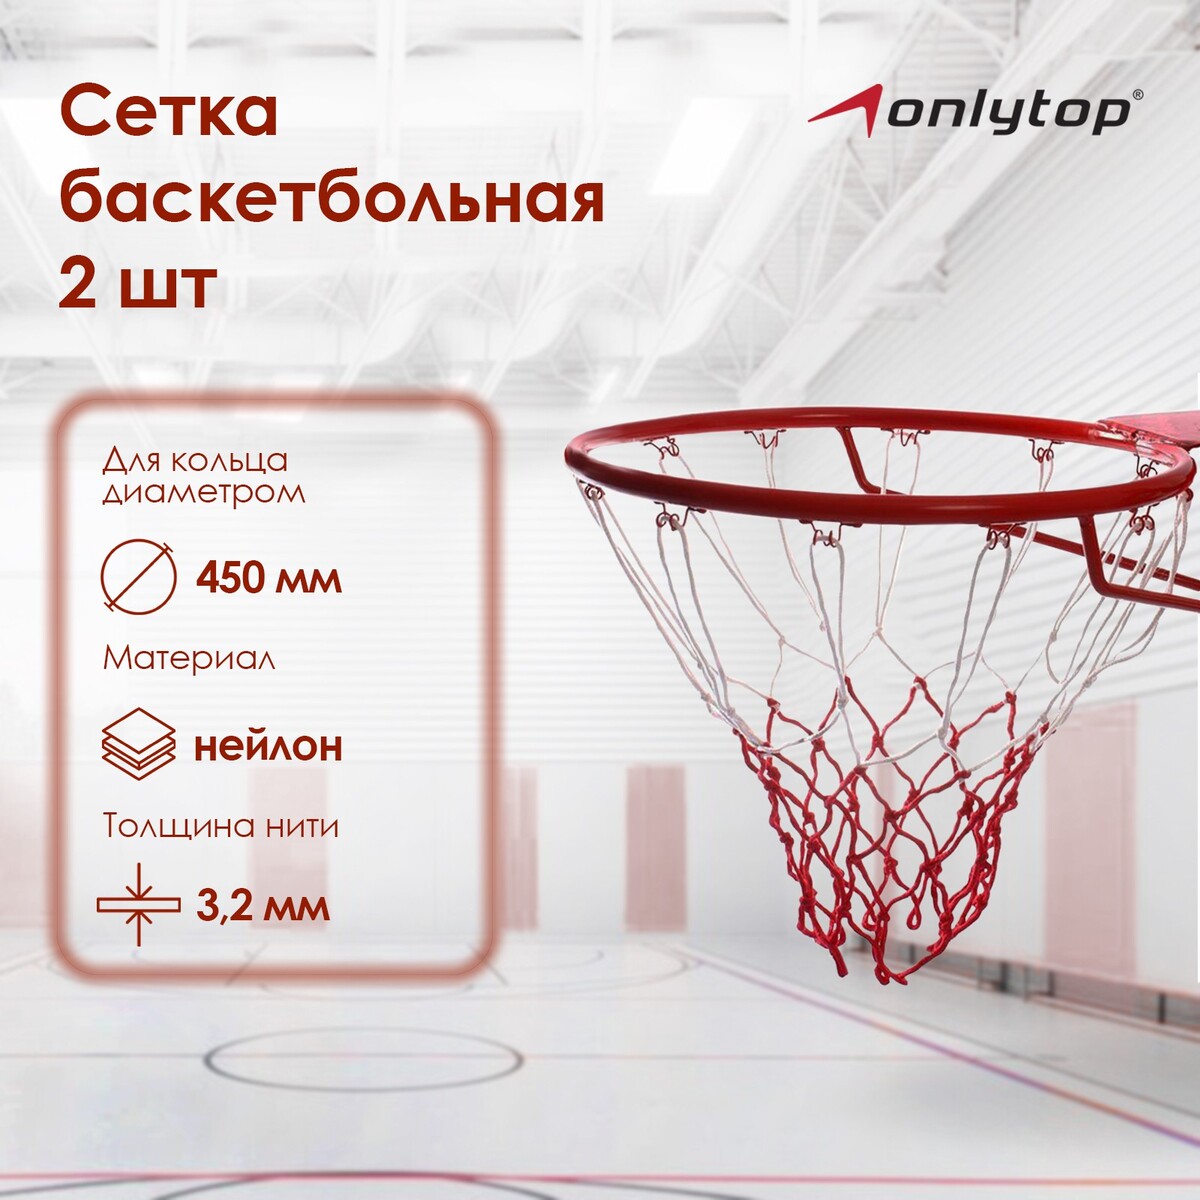 Сетка баскетбольная onlytop, 50 см, нить 3,2 мм, 2 шт. сетка баскетбольная onlytop 50 см нить 3 мм 2 шт